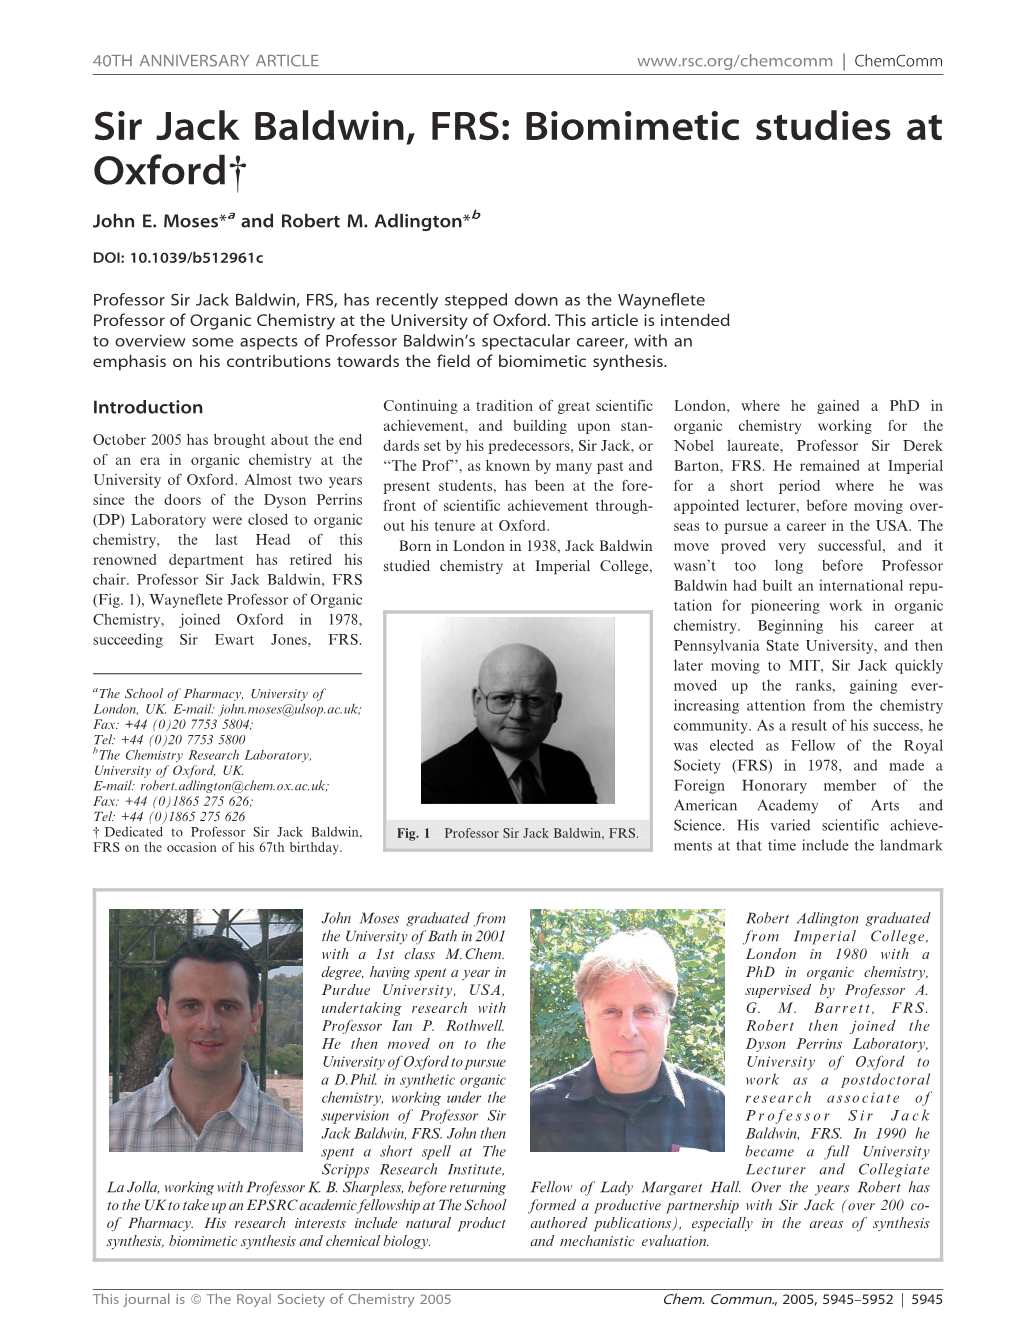 Sir Jack Baldwin, FRS: Biomimetic Studies at Oxford{